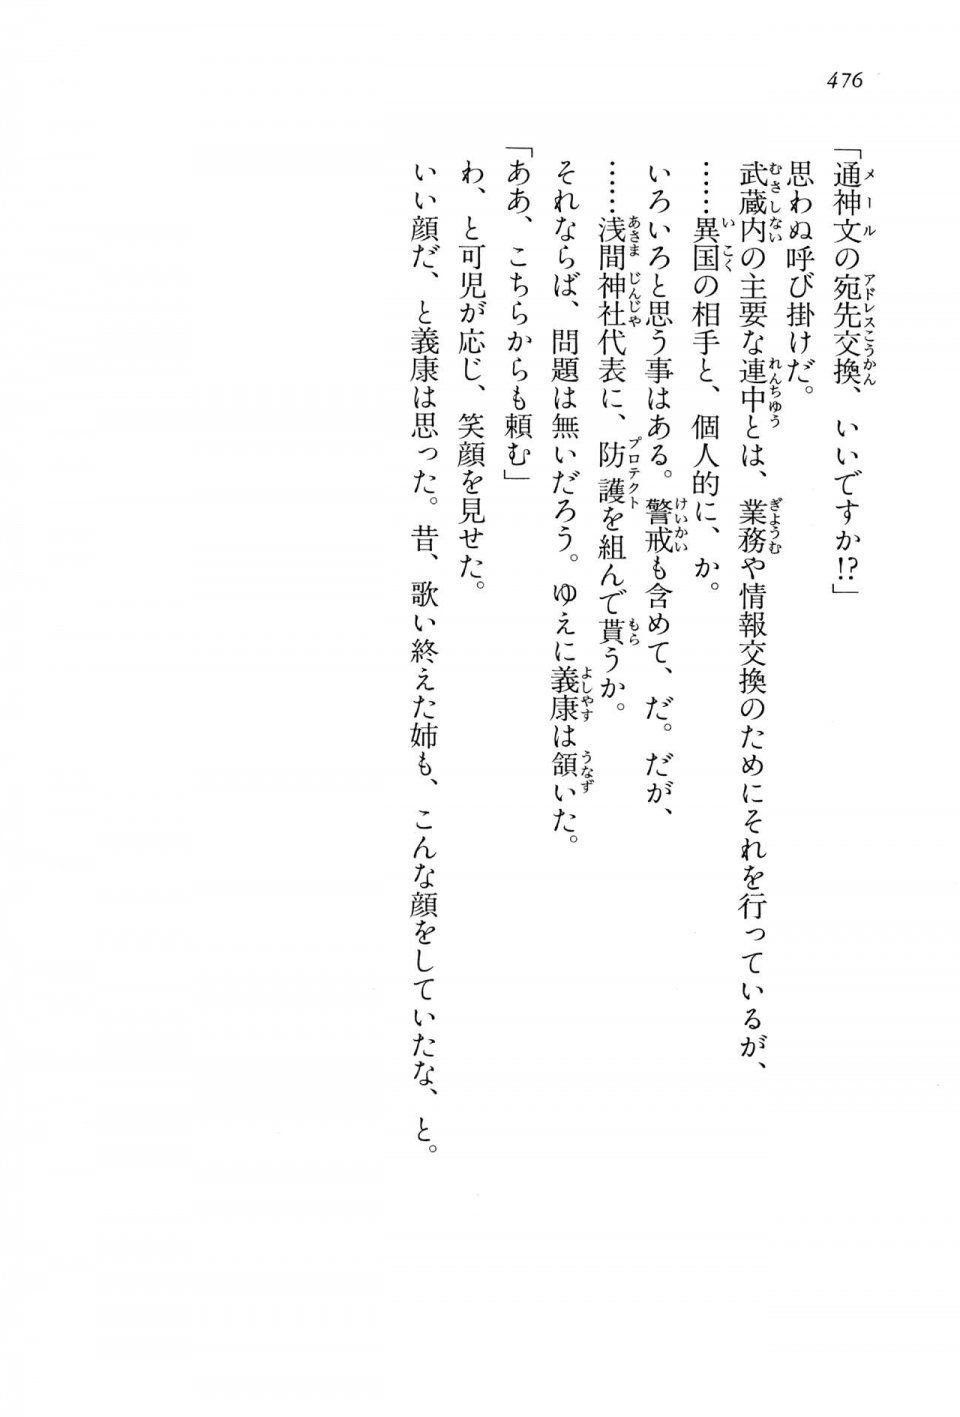 Kyoukai Senjou no Horizon LN Vol 15(6C) Part 1 - Photo #476